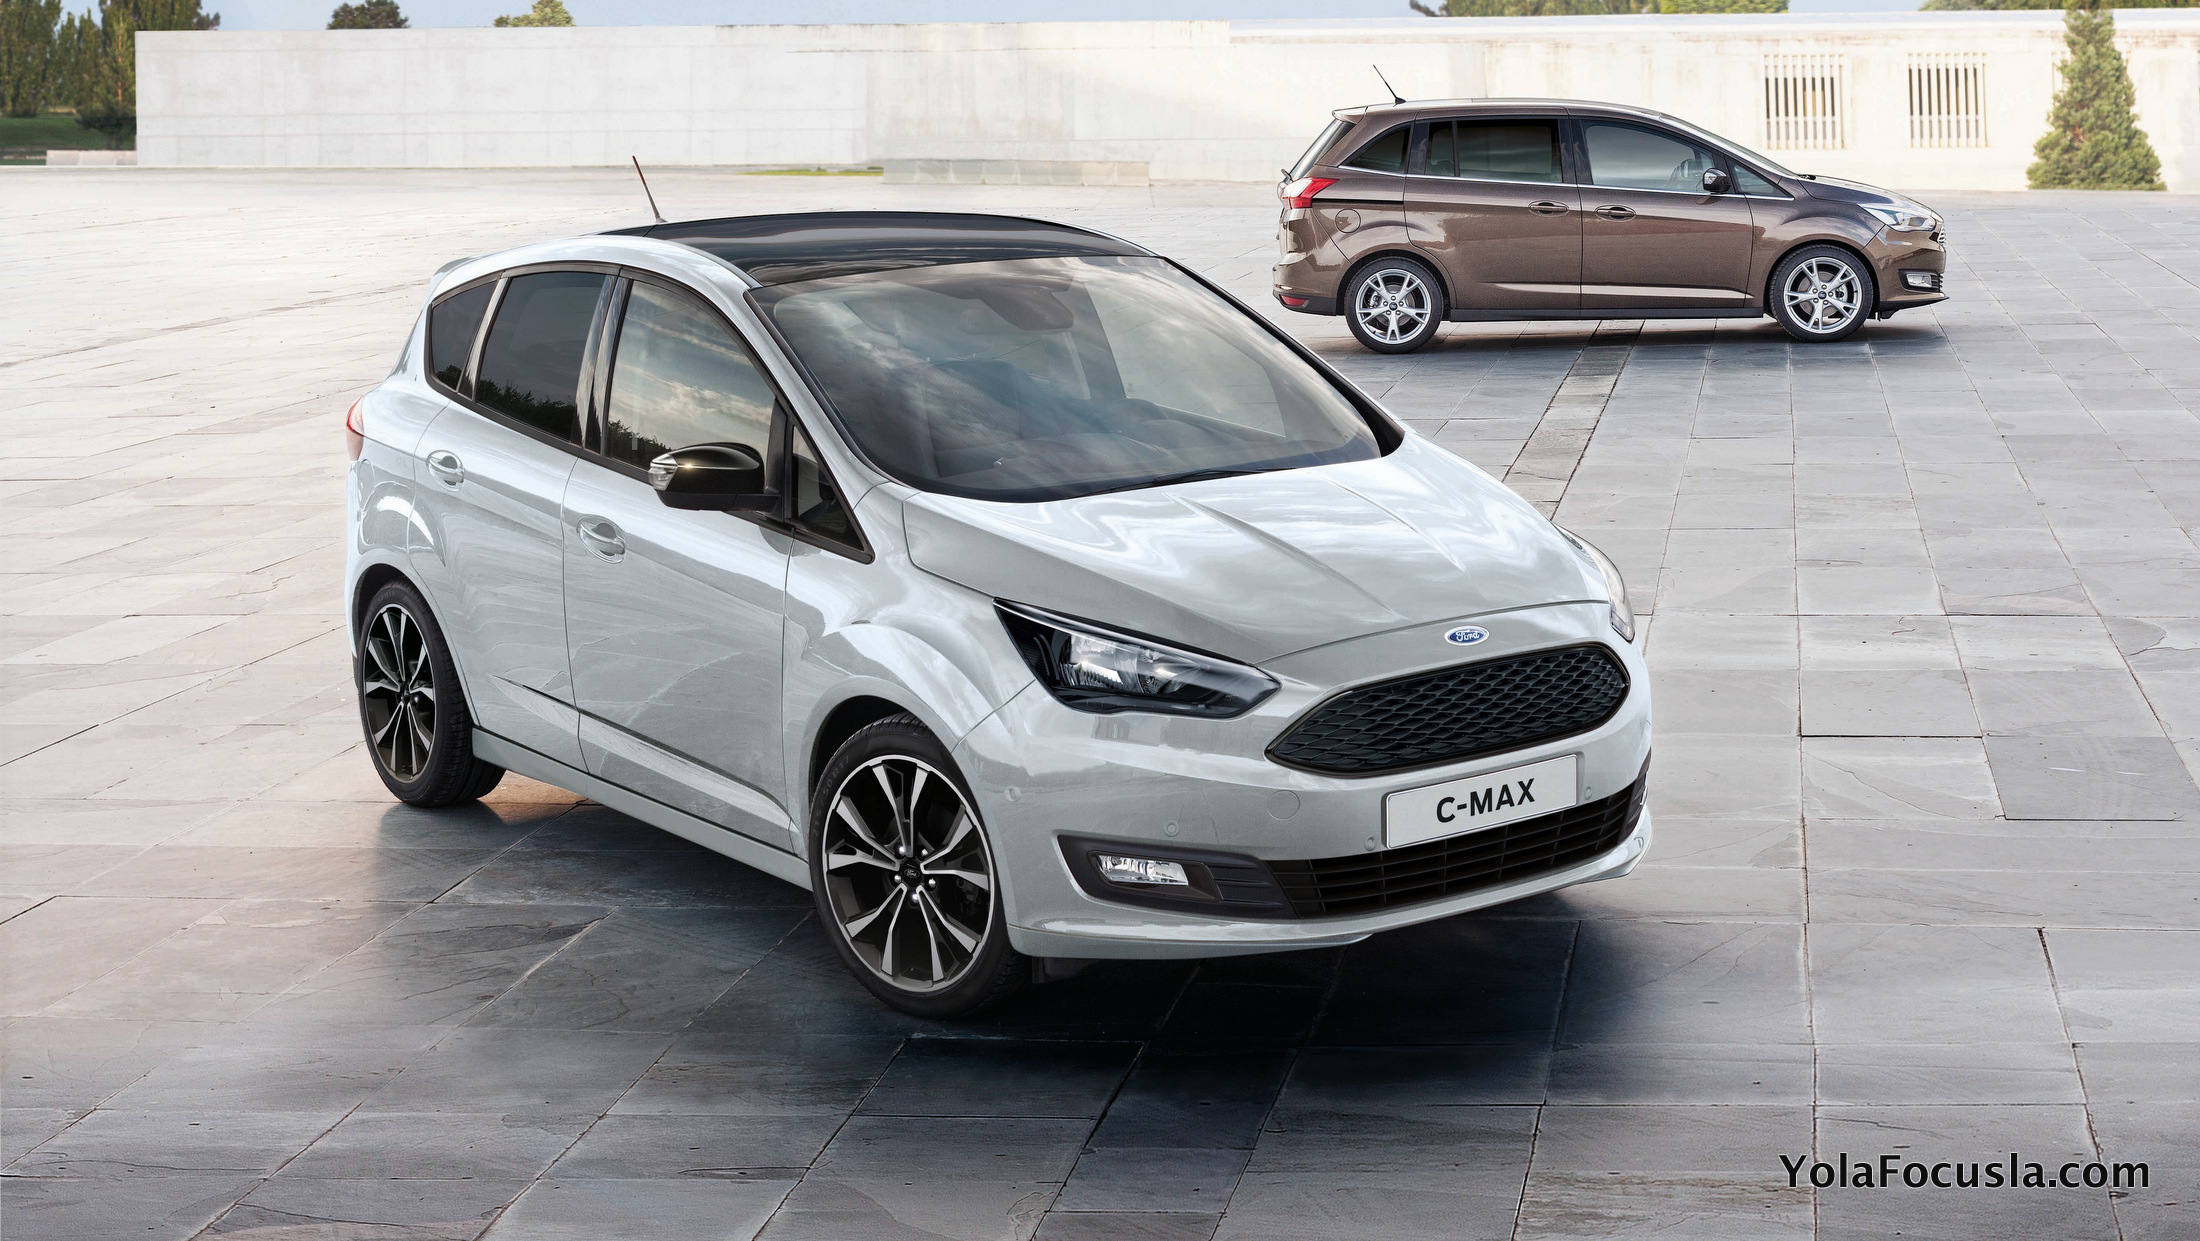 2018 Yeni Ford CMAX Sport Tanıtıldı Yola Focusla